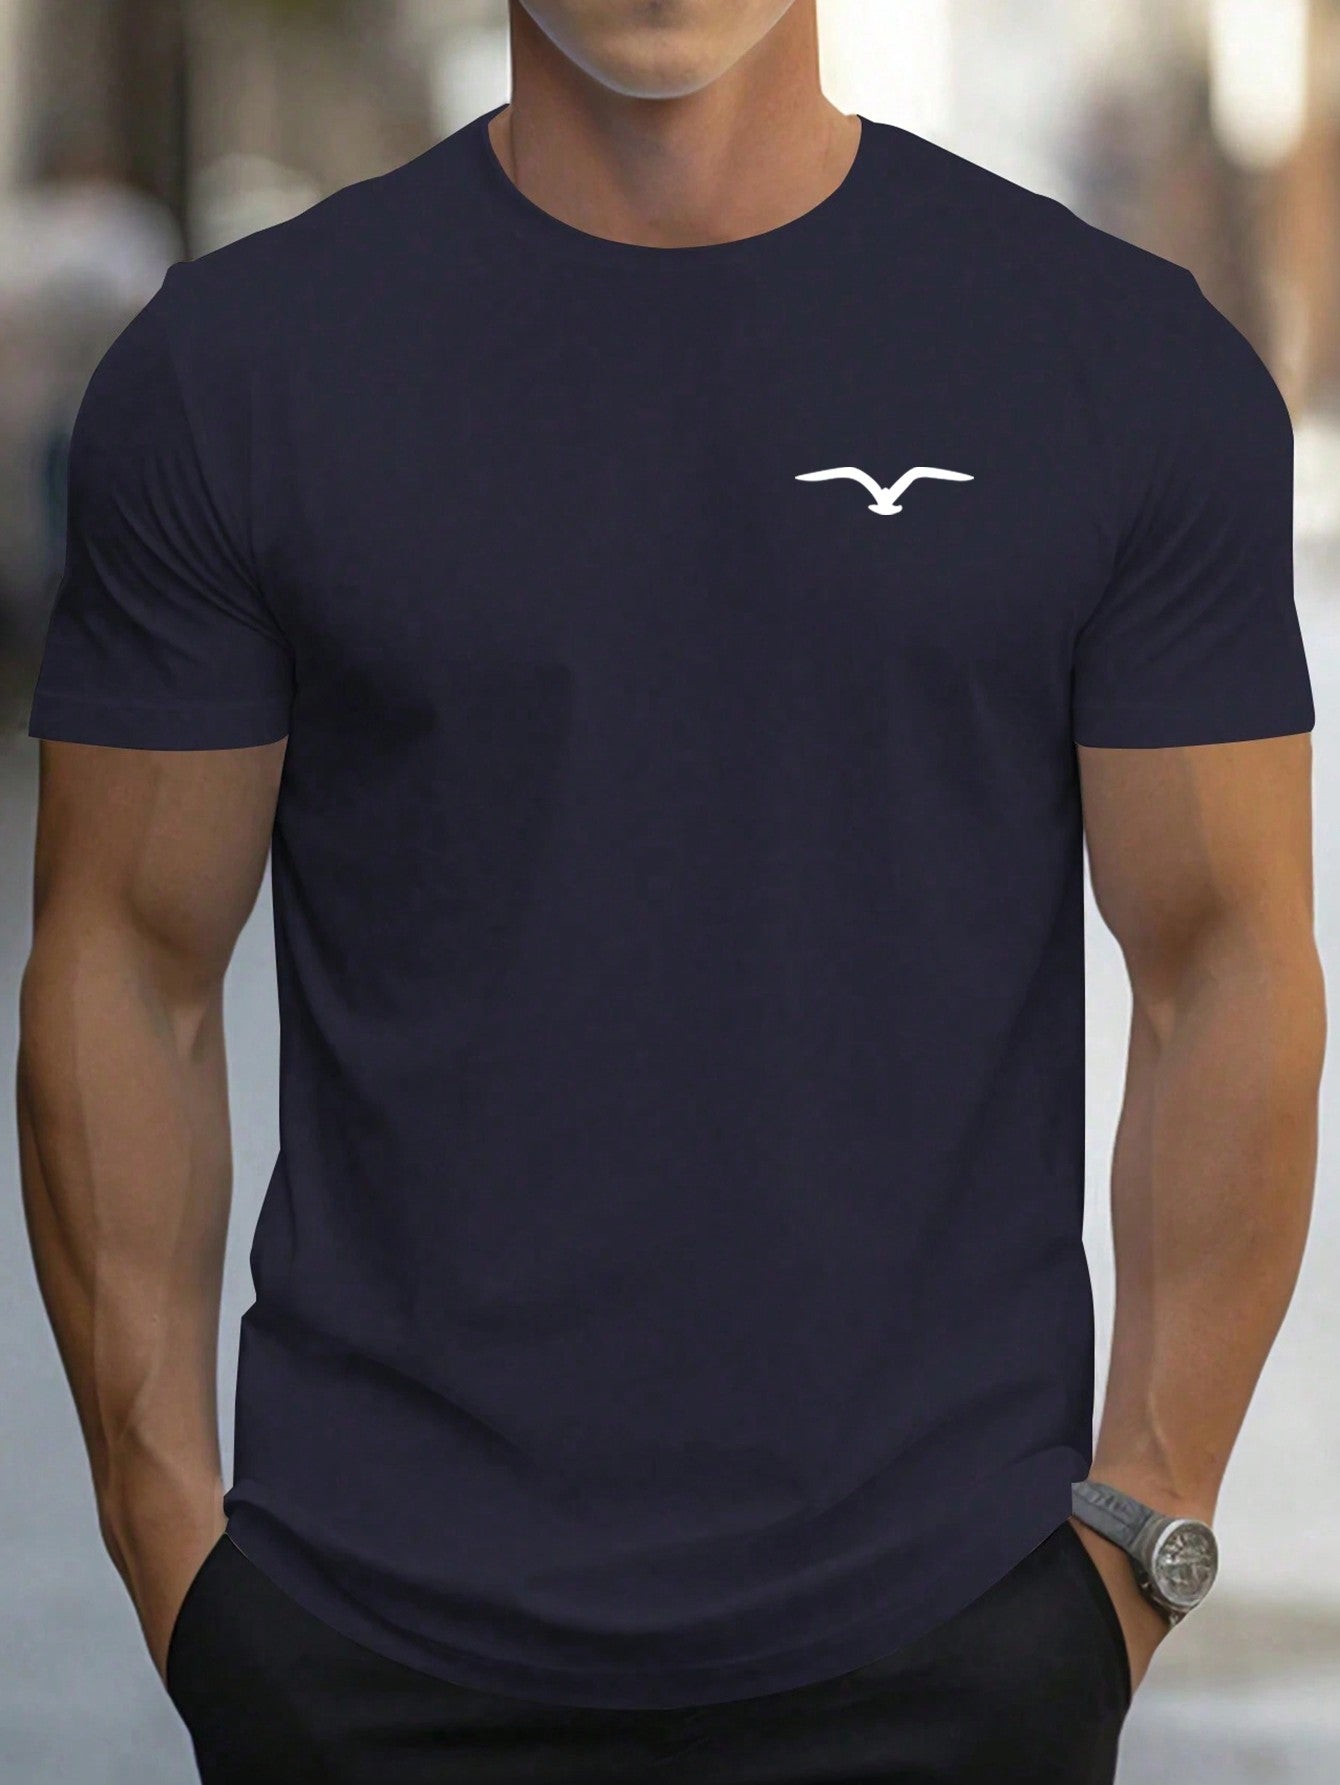 Men's Casual Seagull Print Crew Neck T-Shirt, Short Sleeve, Stretch Fabric